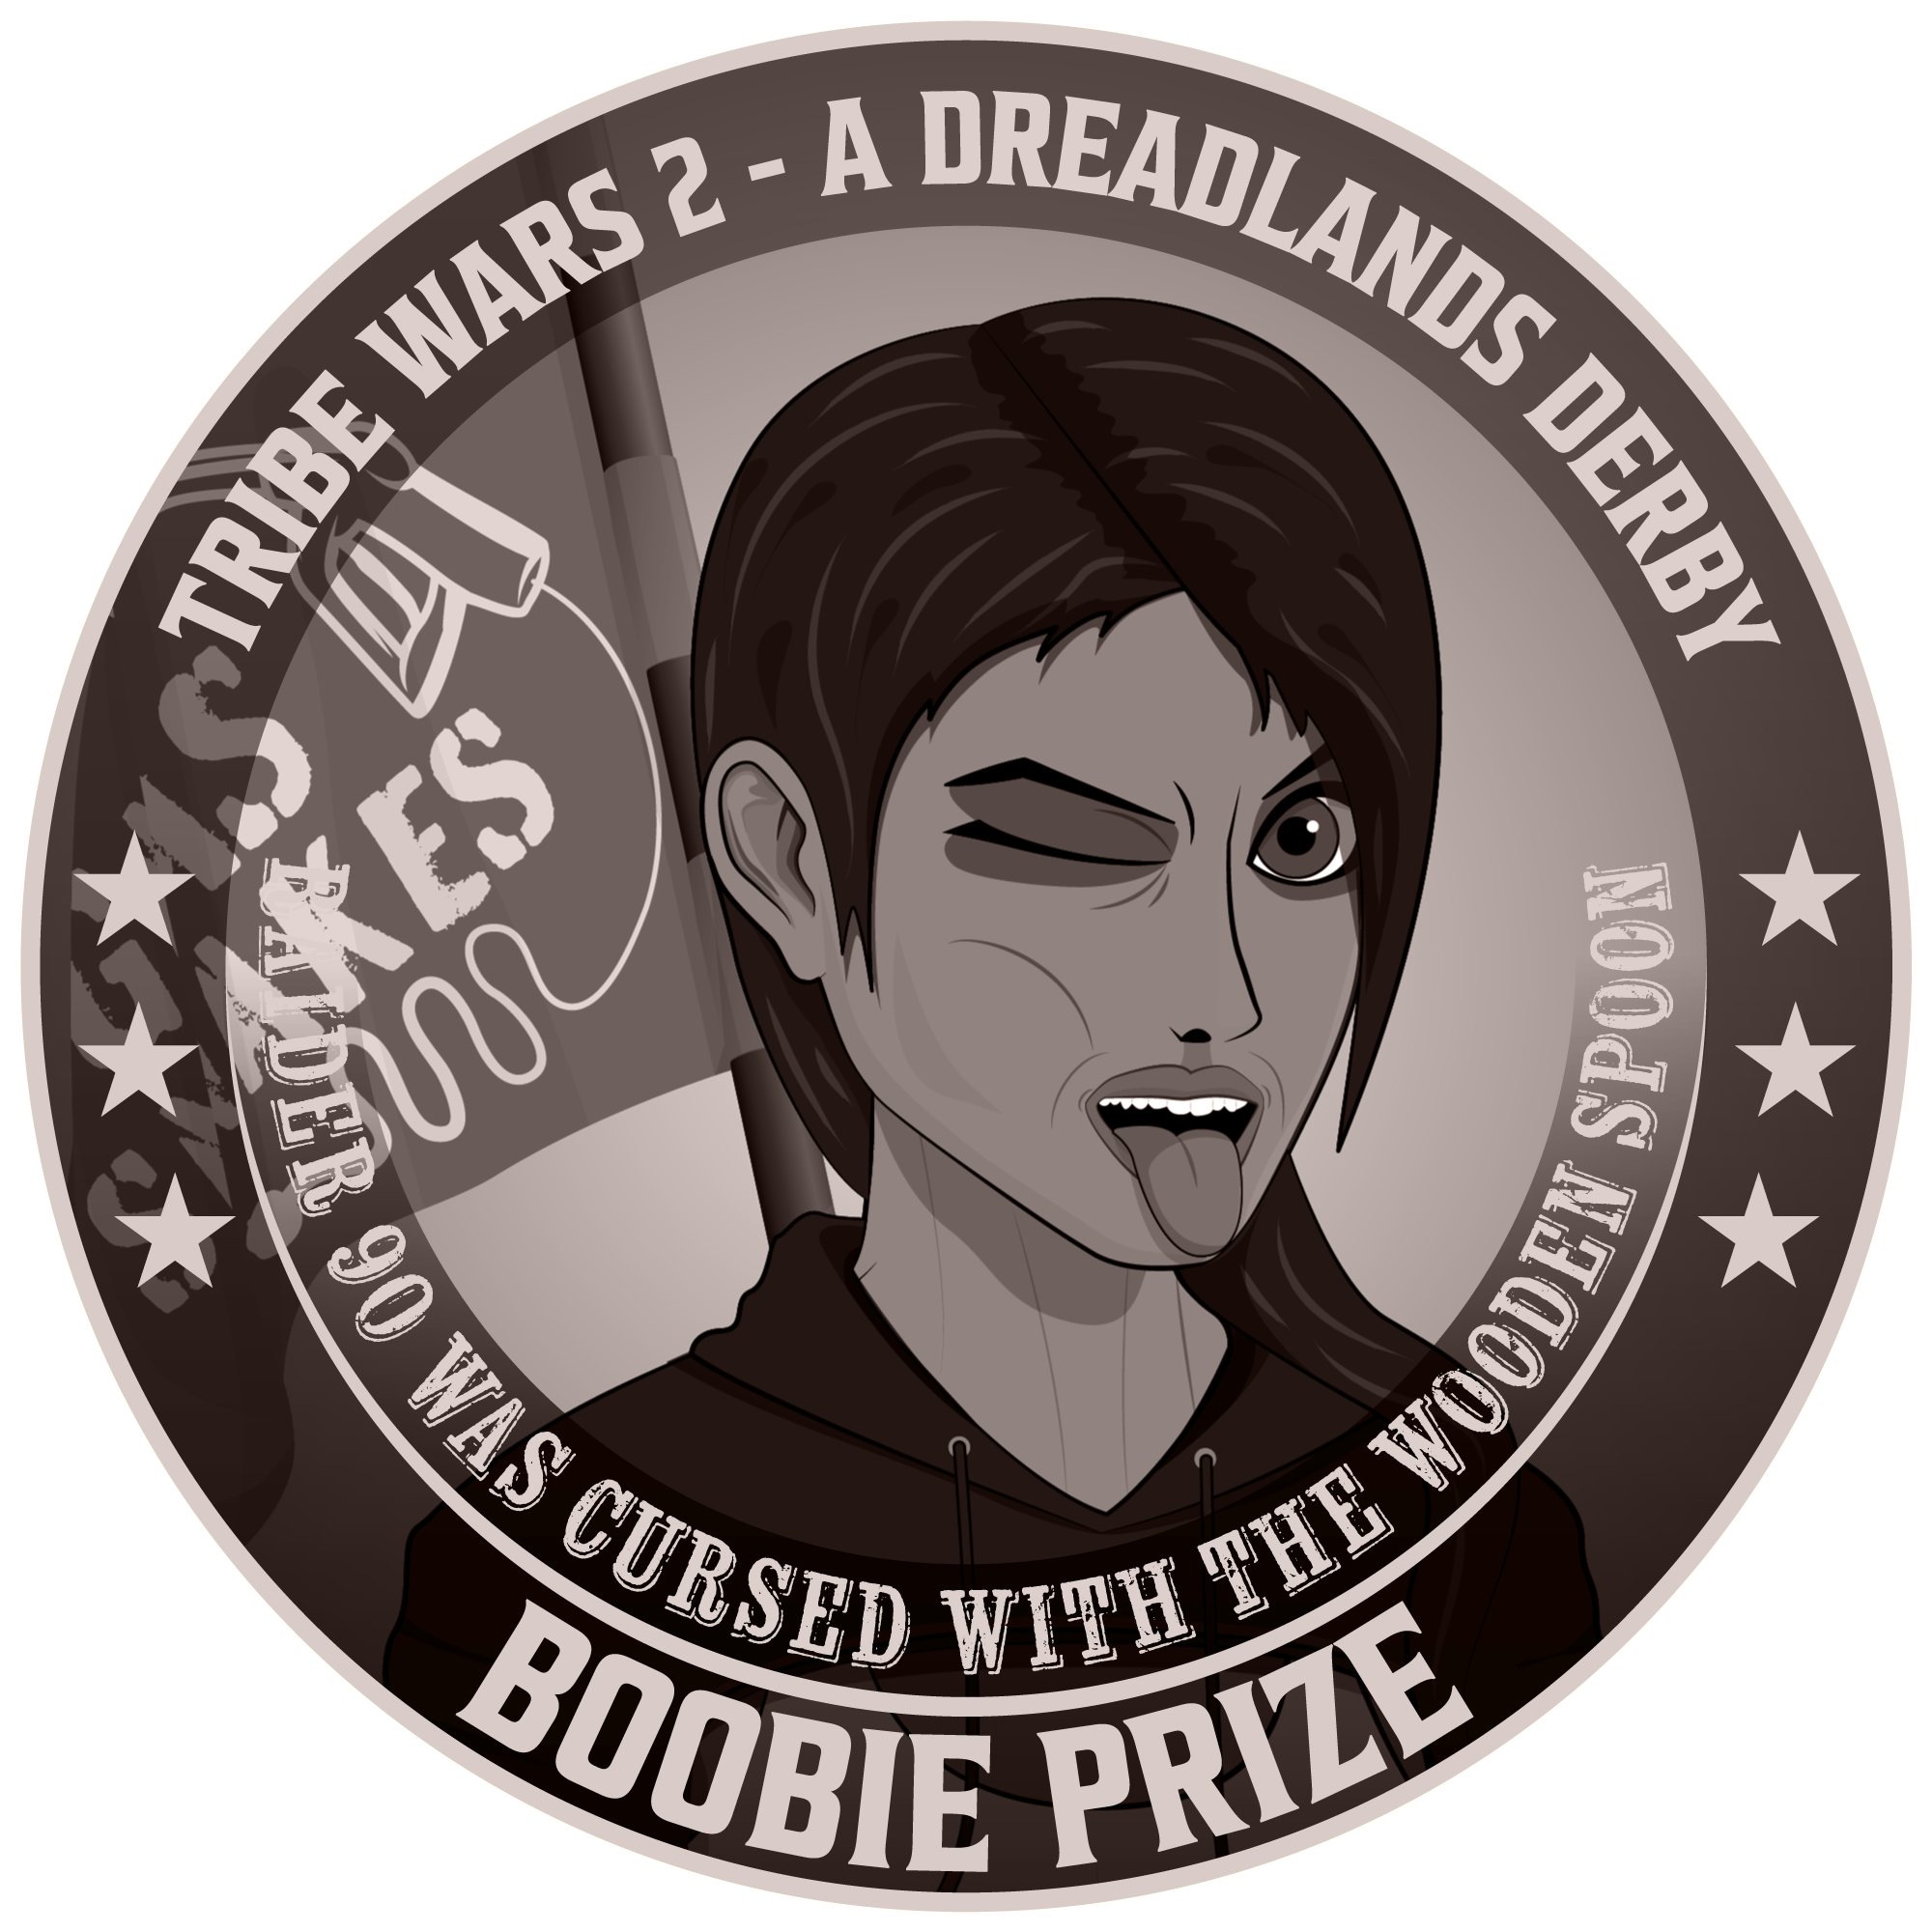 Boobie-Prize